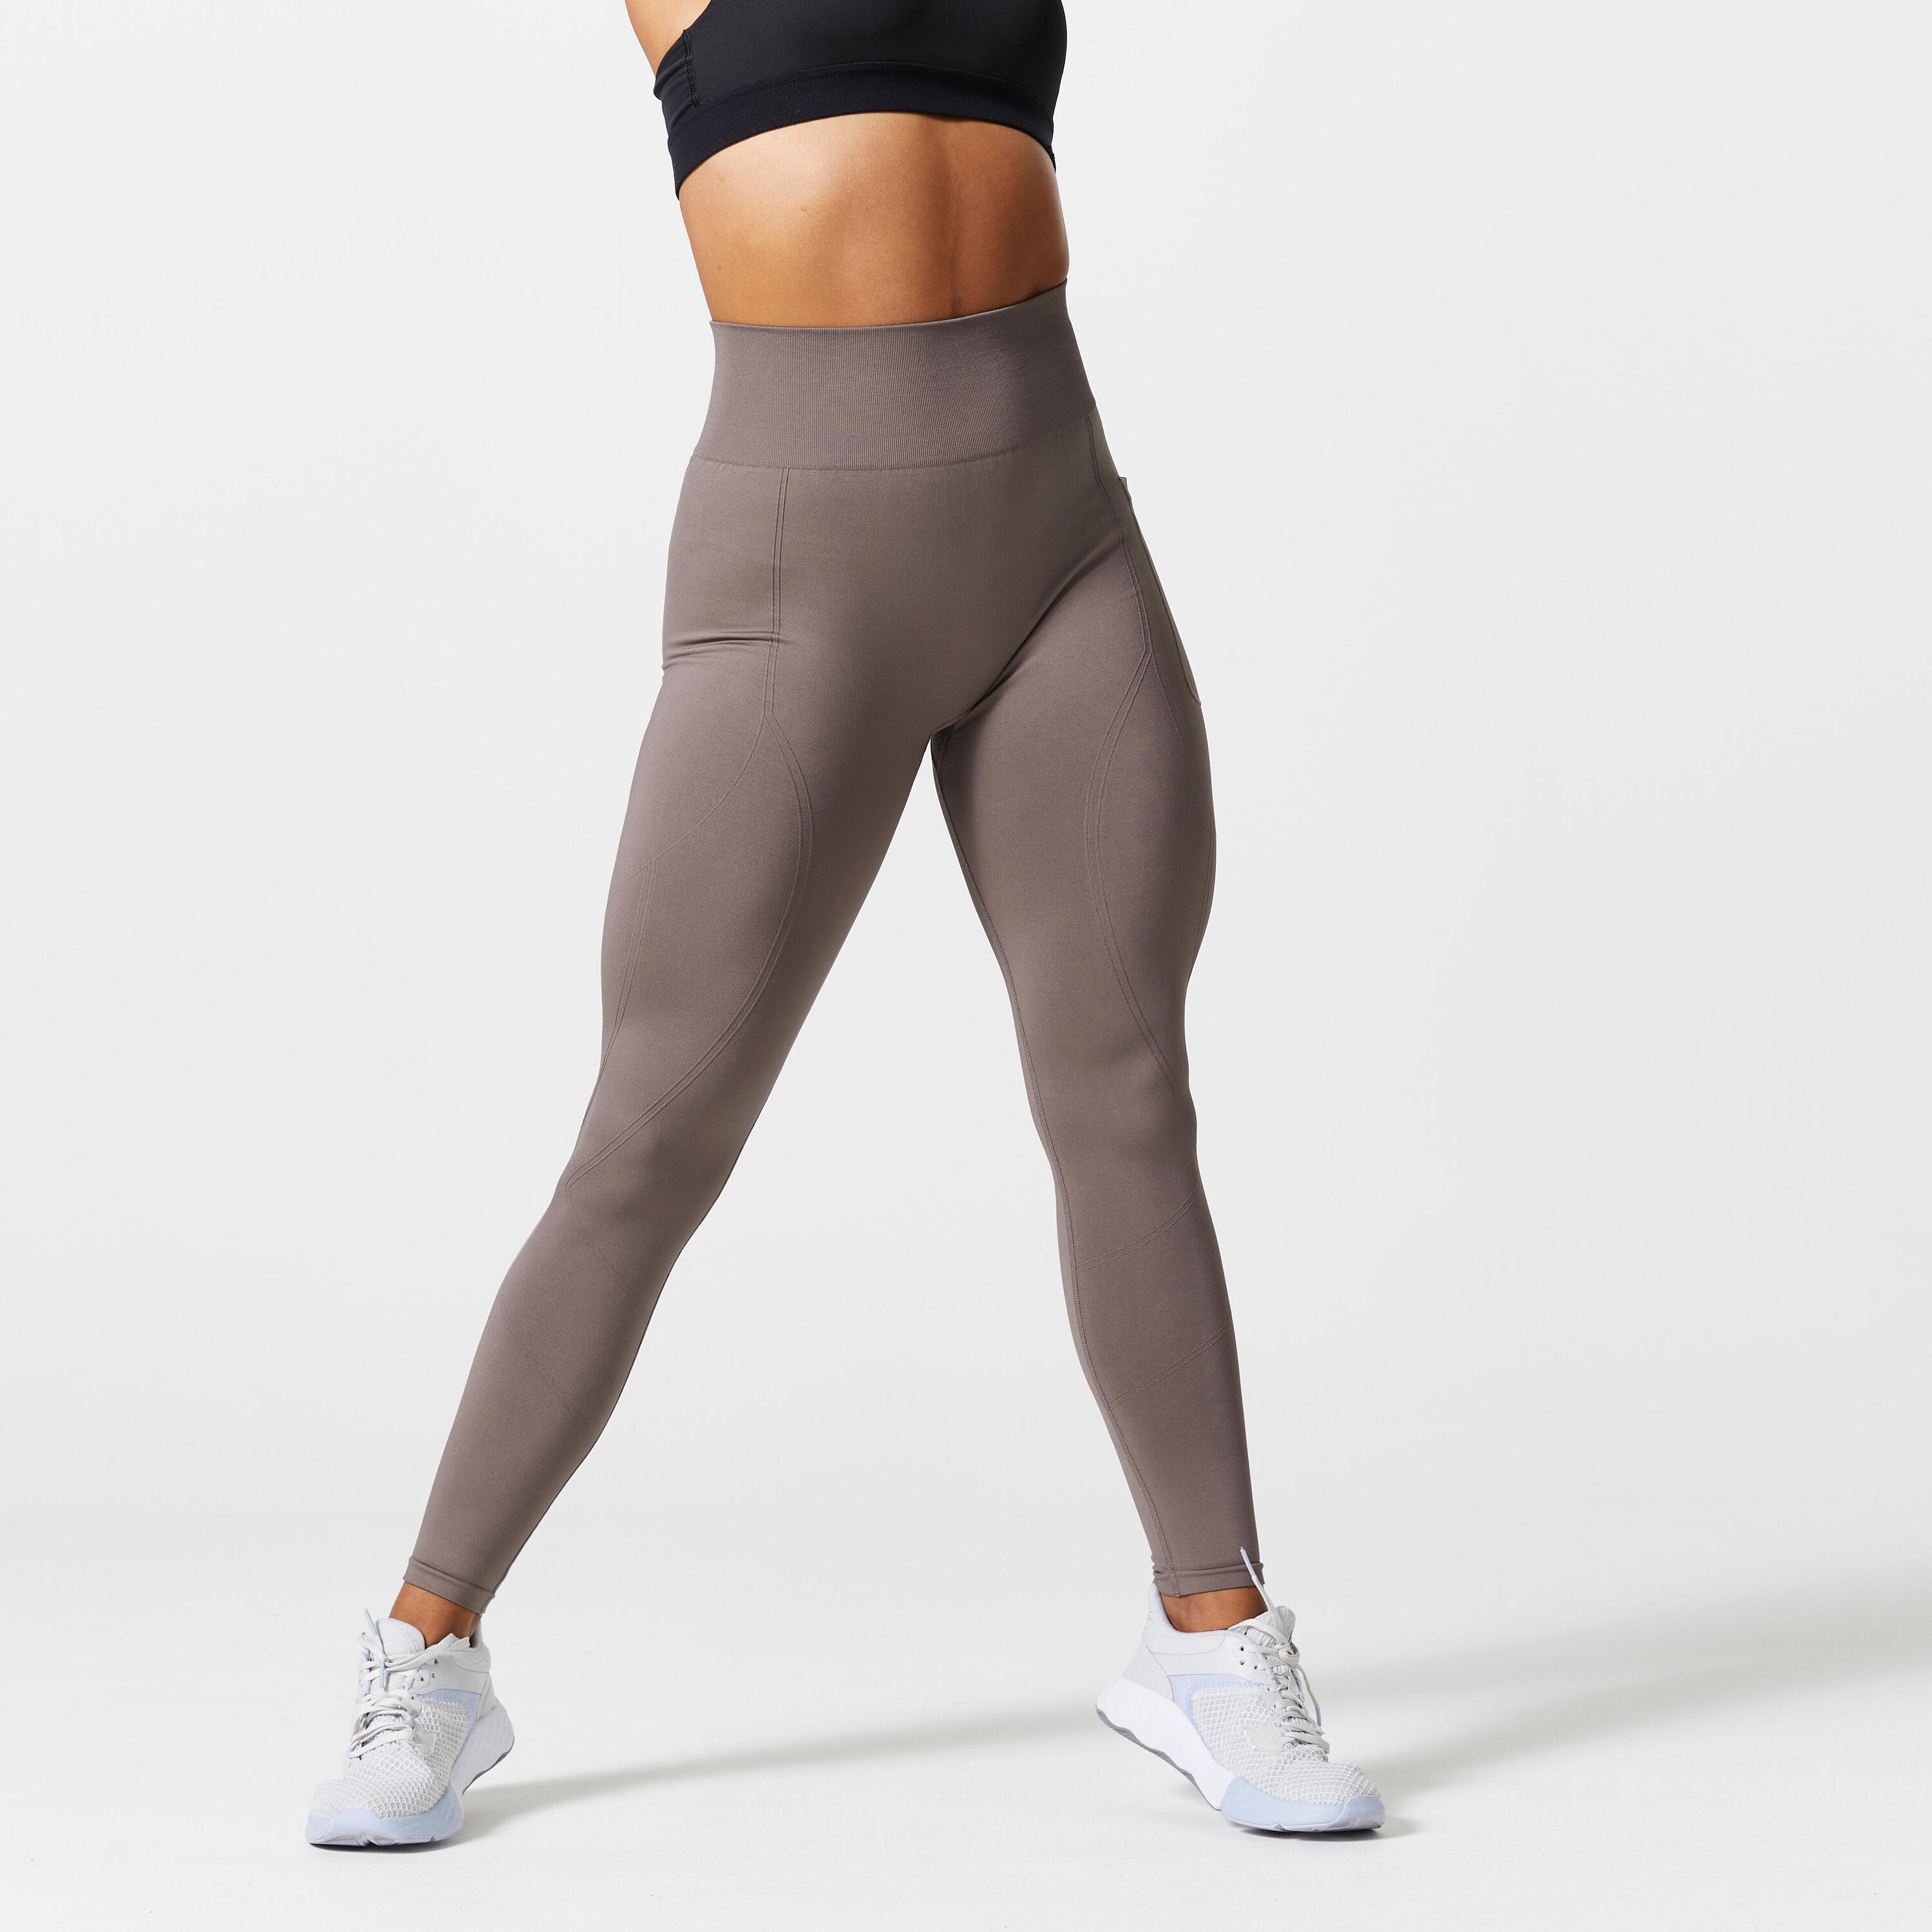 DOMYOS Women's Push-Up Effect Seamless Leggings - Dark Grey